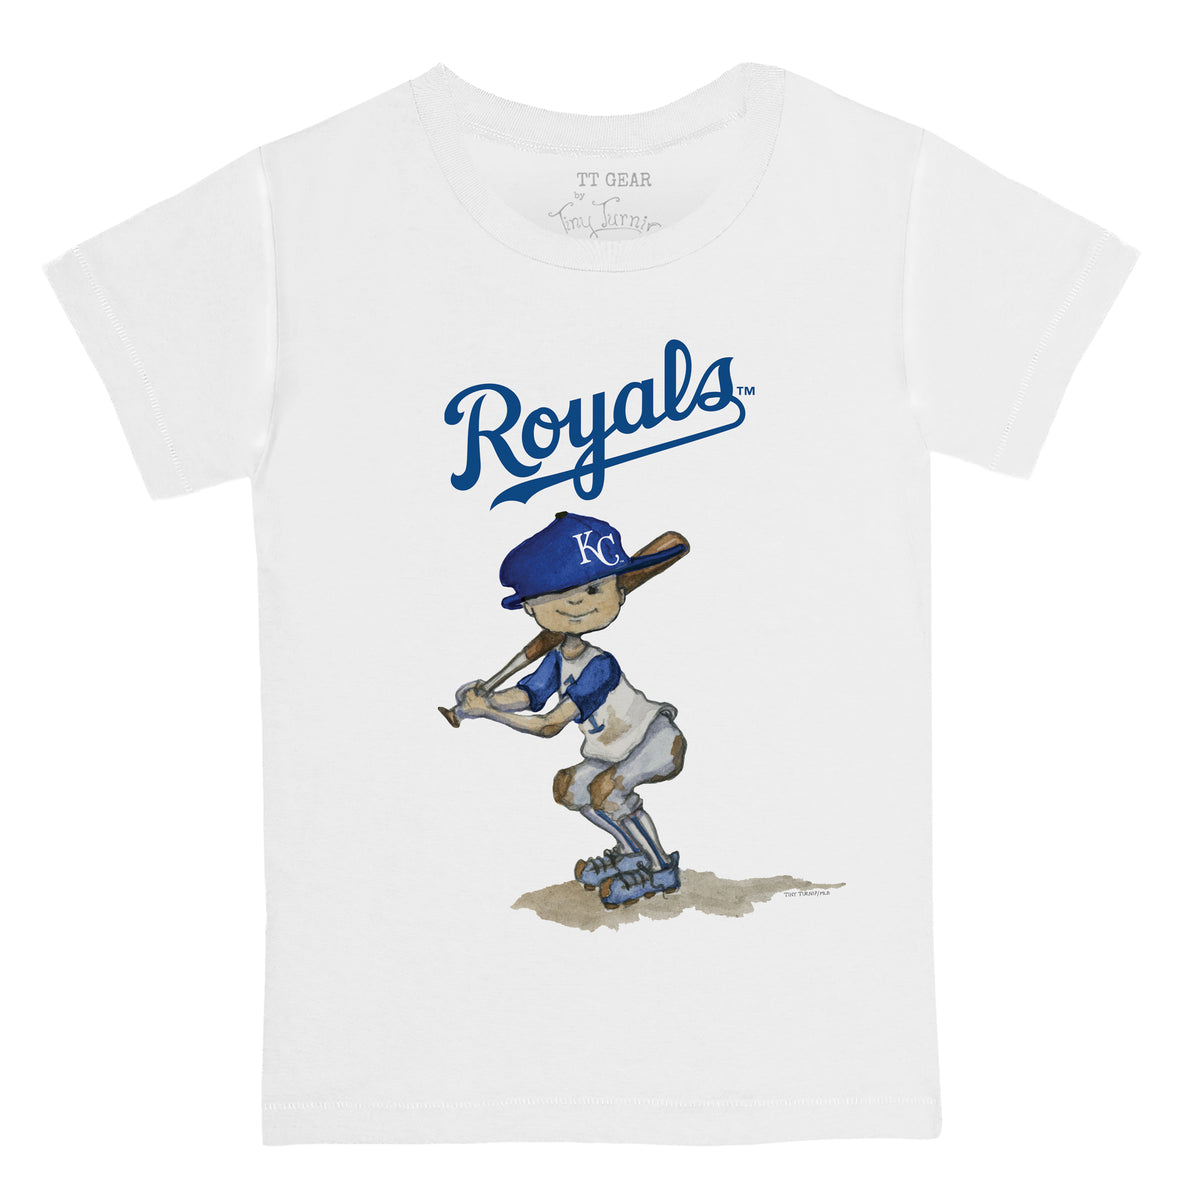 Eric Hosmer Kansas City Royals Youth White Name & Number T-Shirt